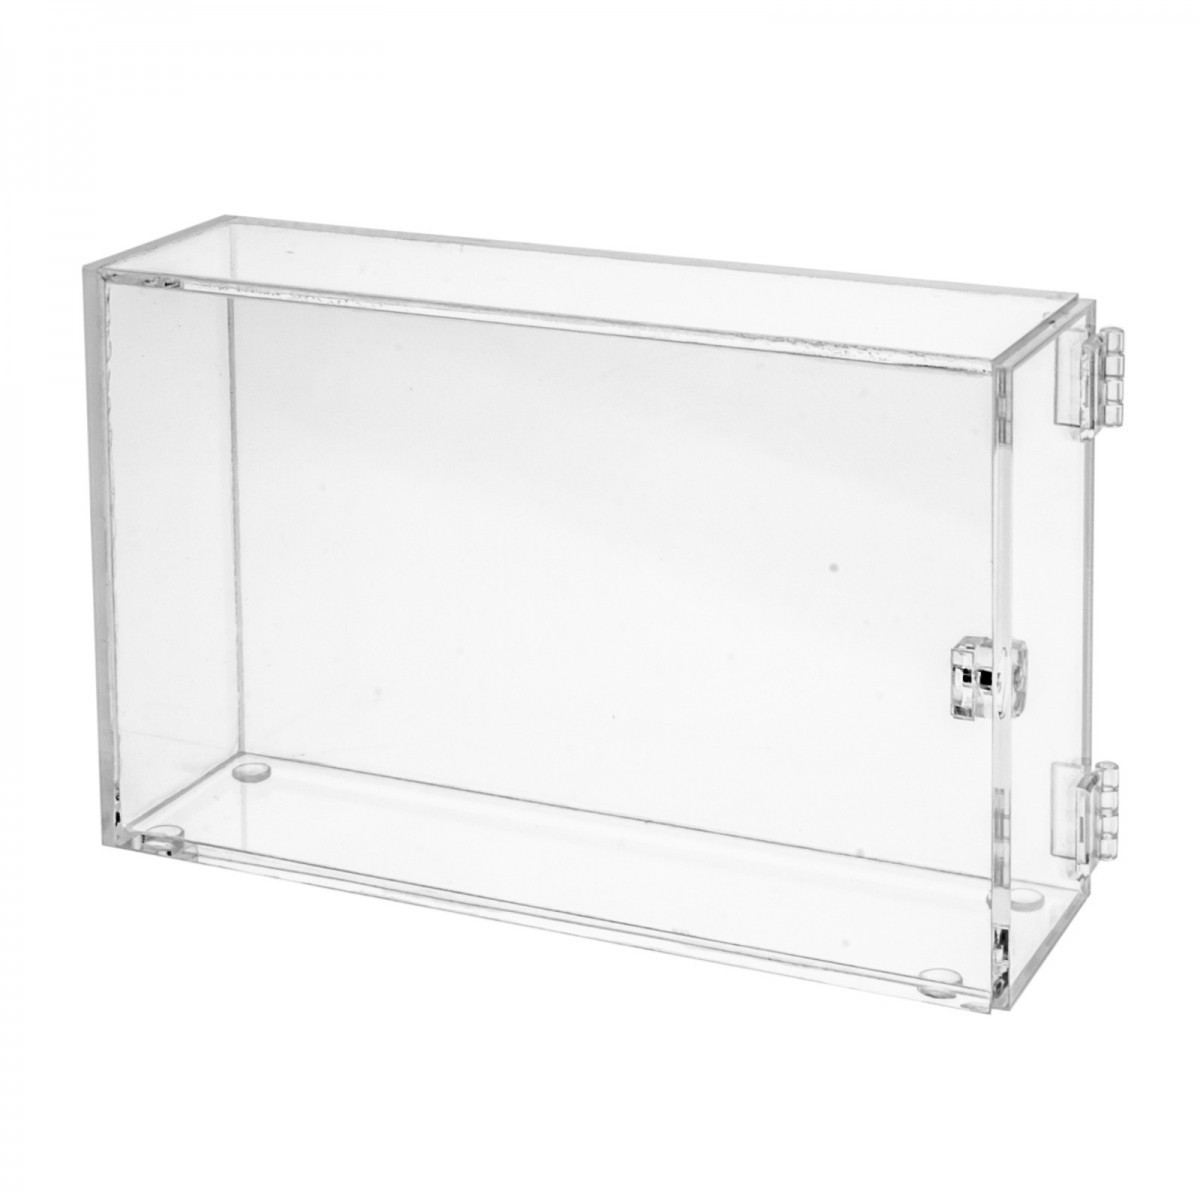 E-194 - Teca in plexiglass trasparente